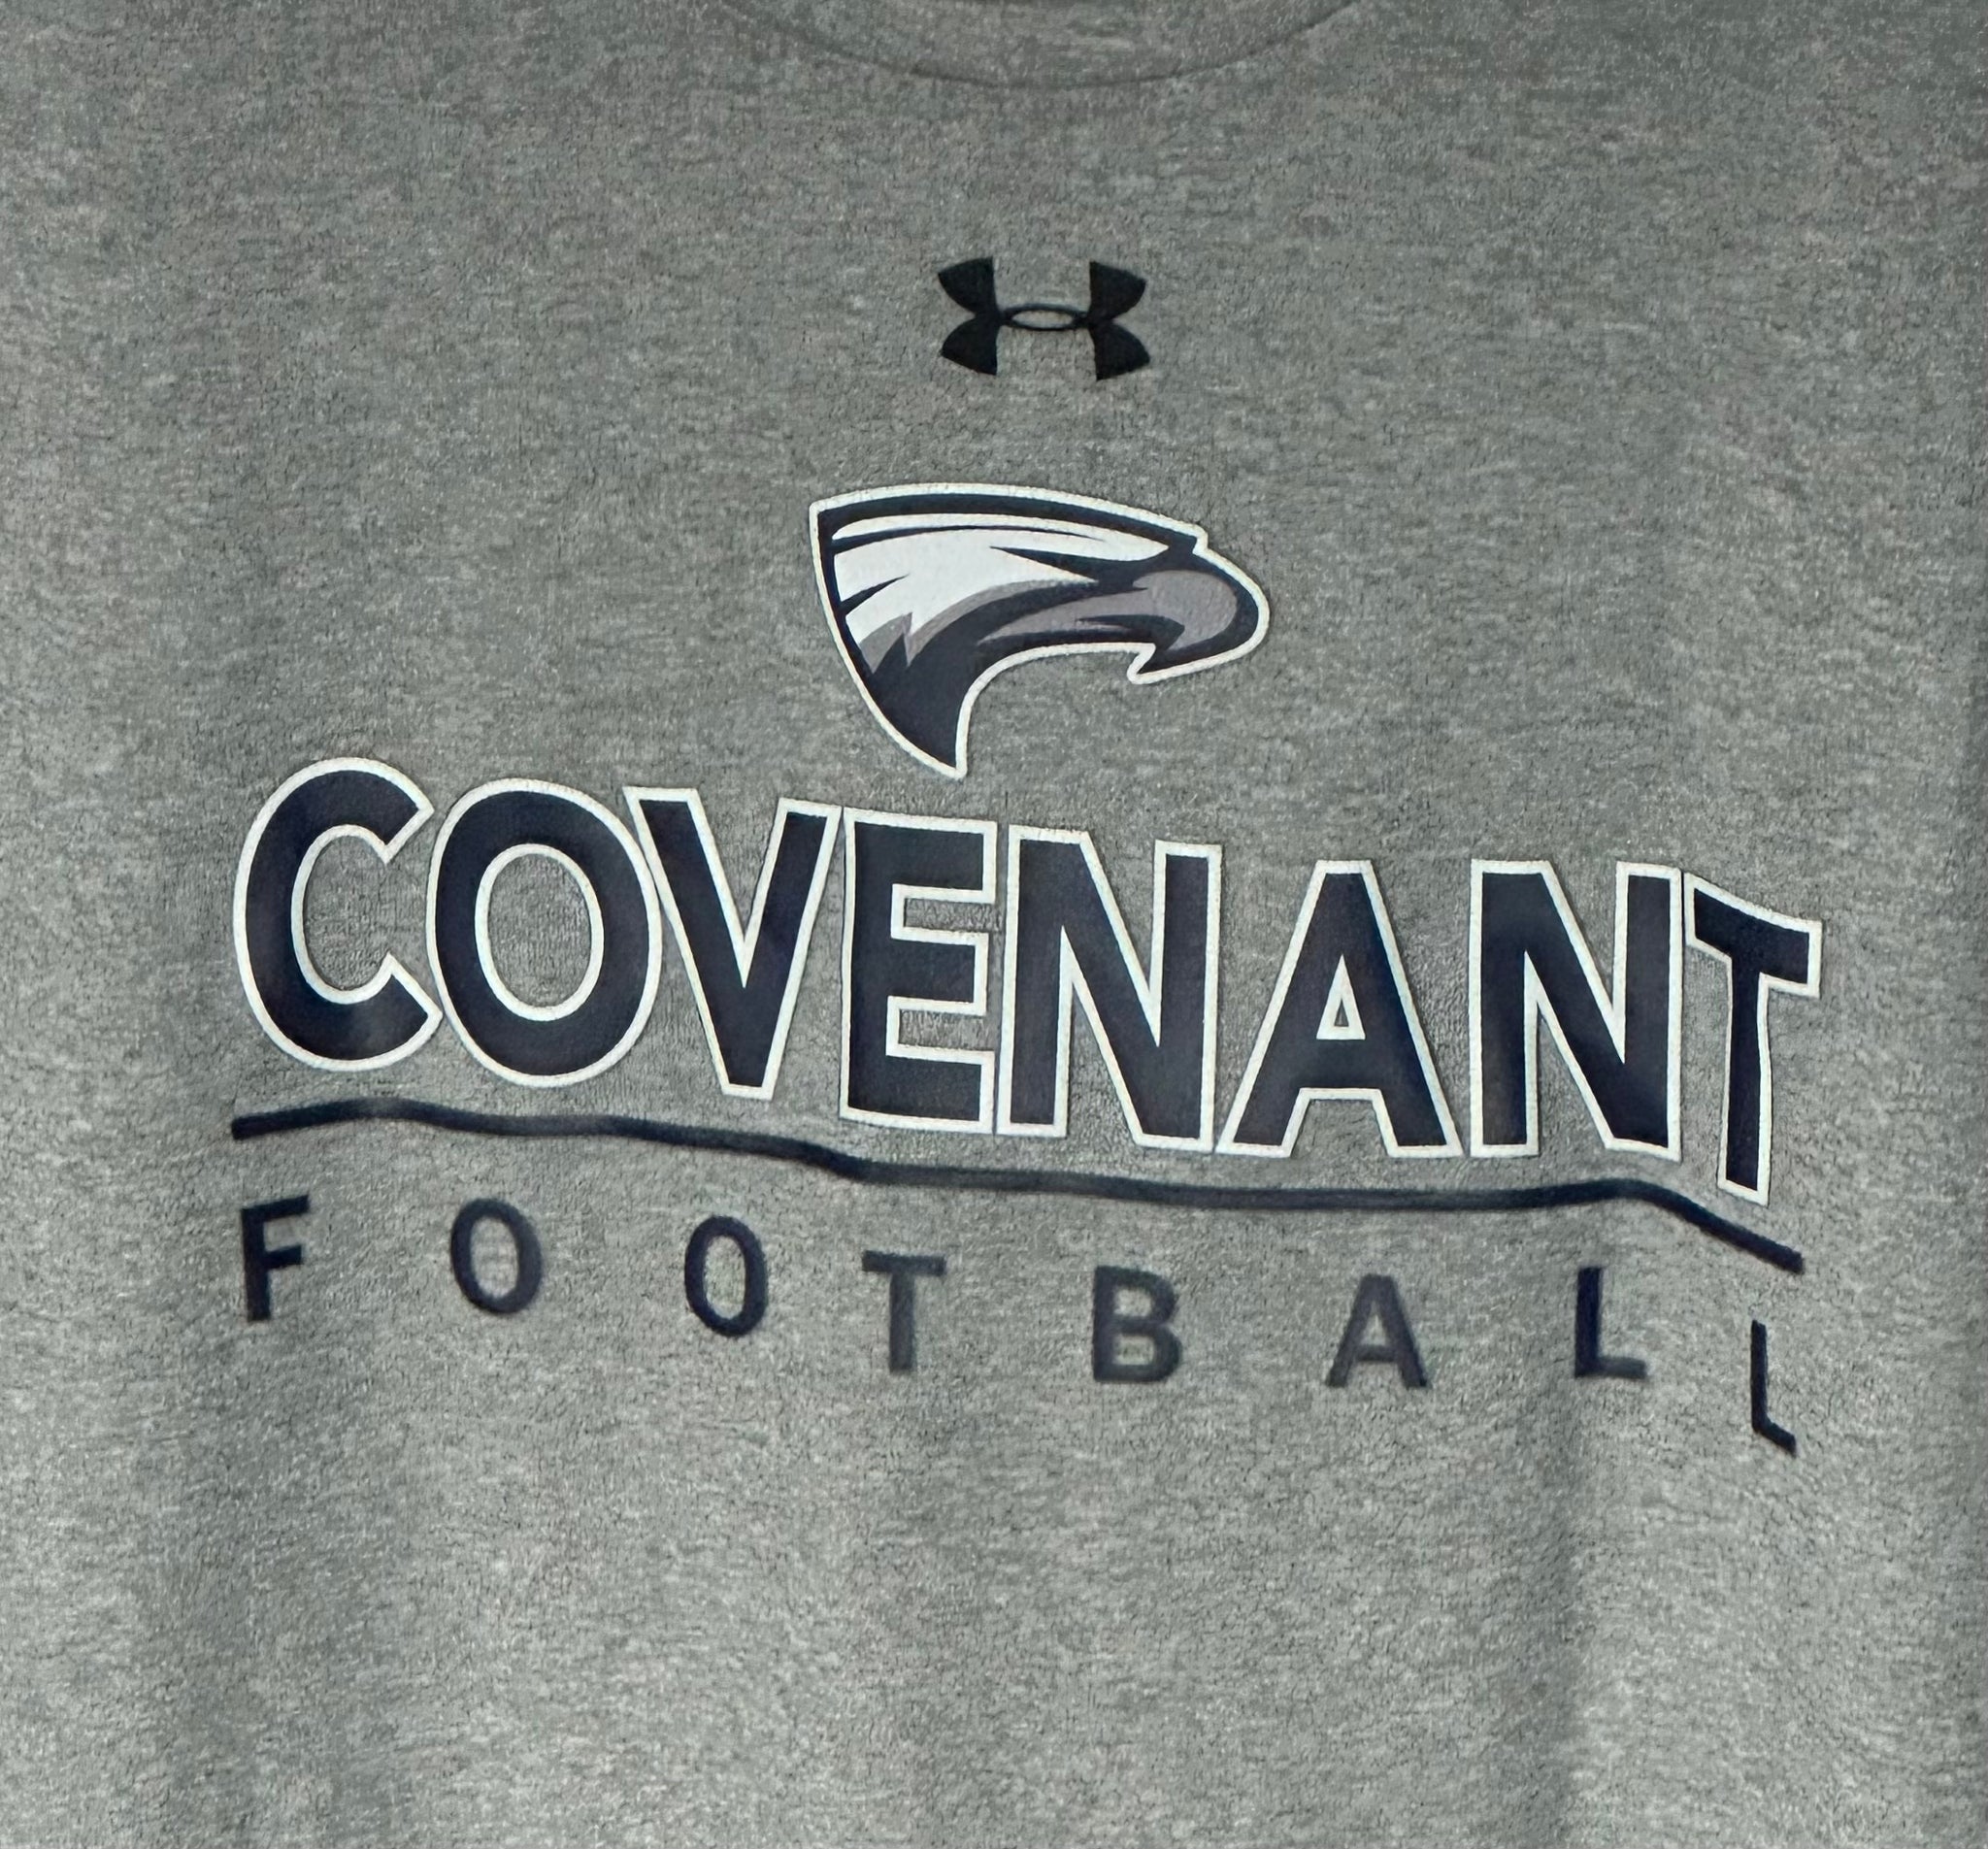 Covenant "Insert your Sport" - Team T-Shirts/Sweatshirts